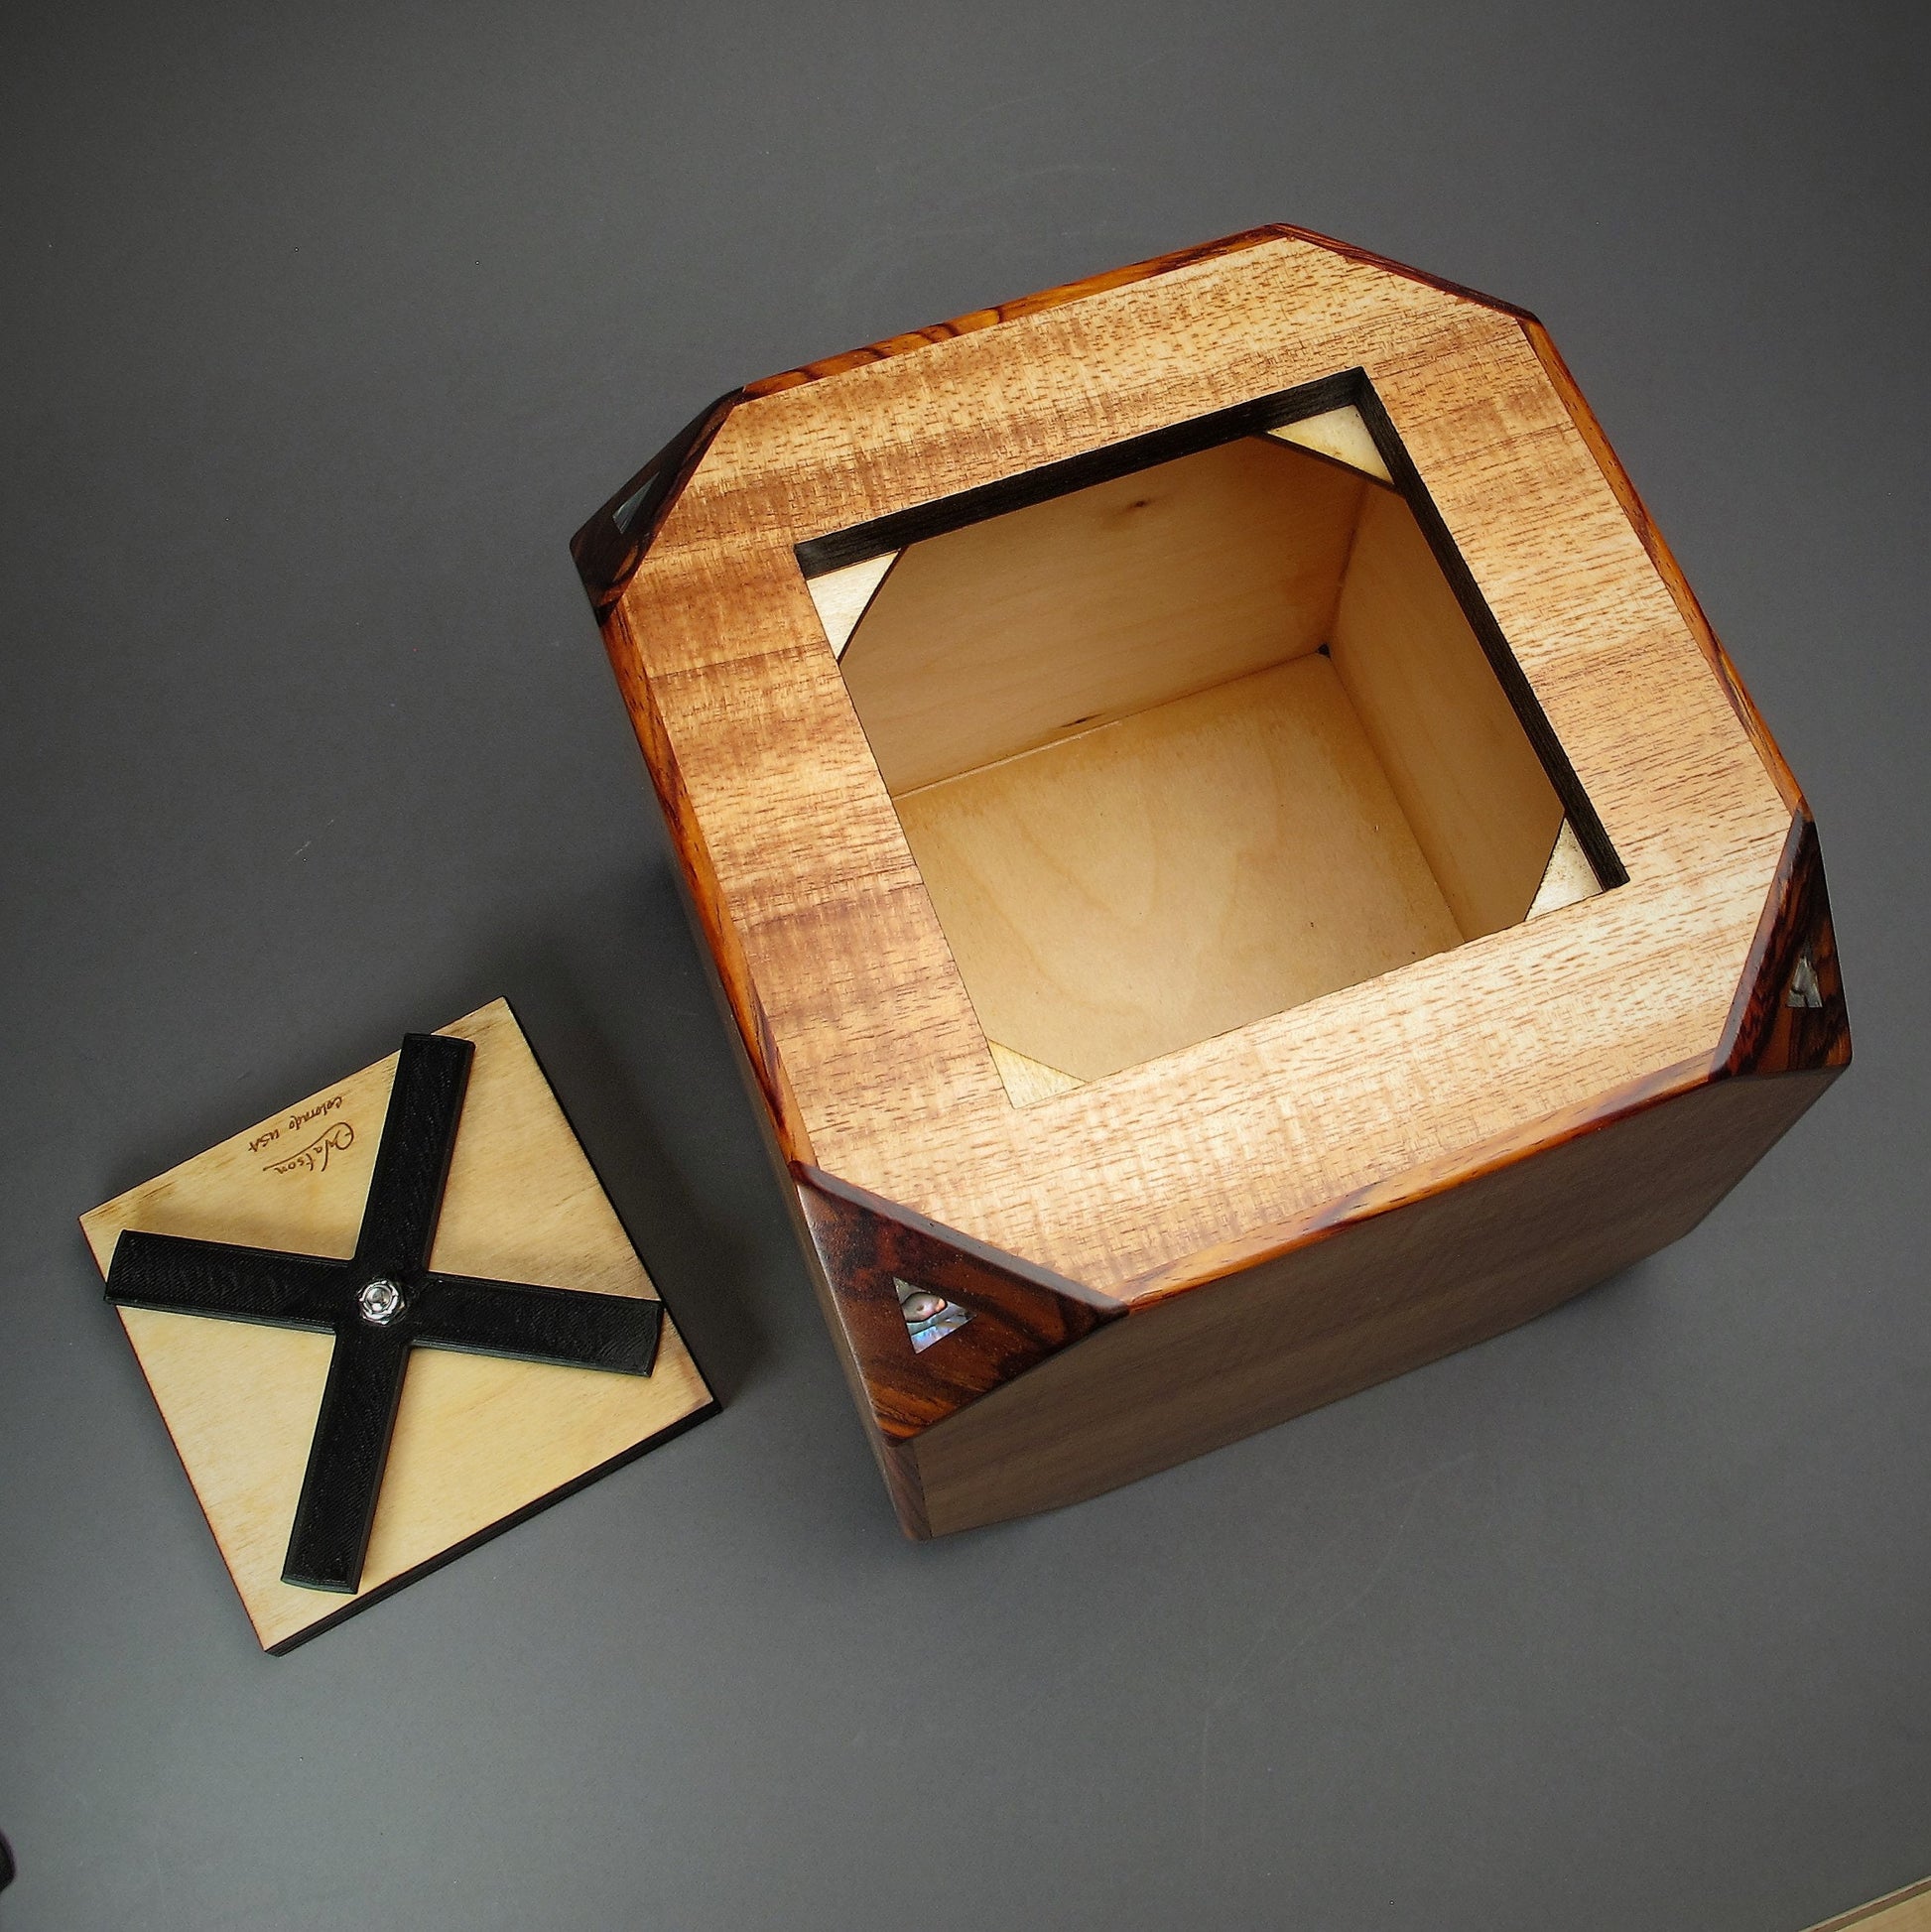 Modern Koa Wood Urn for Adult Human Ashes, 225 cu-in, Unique Cube Design